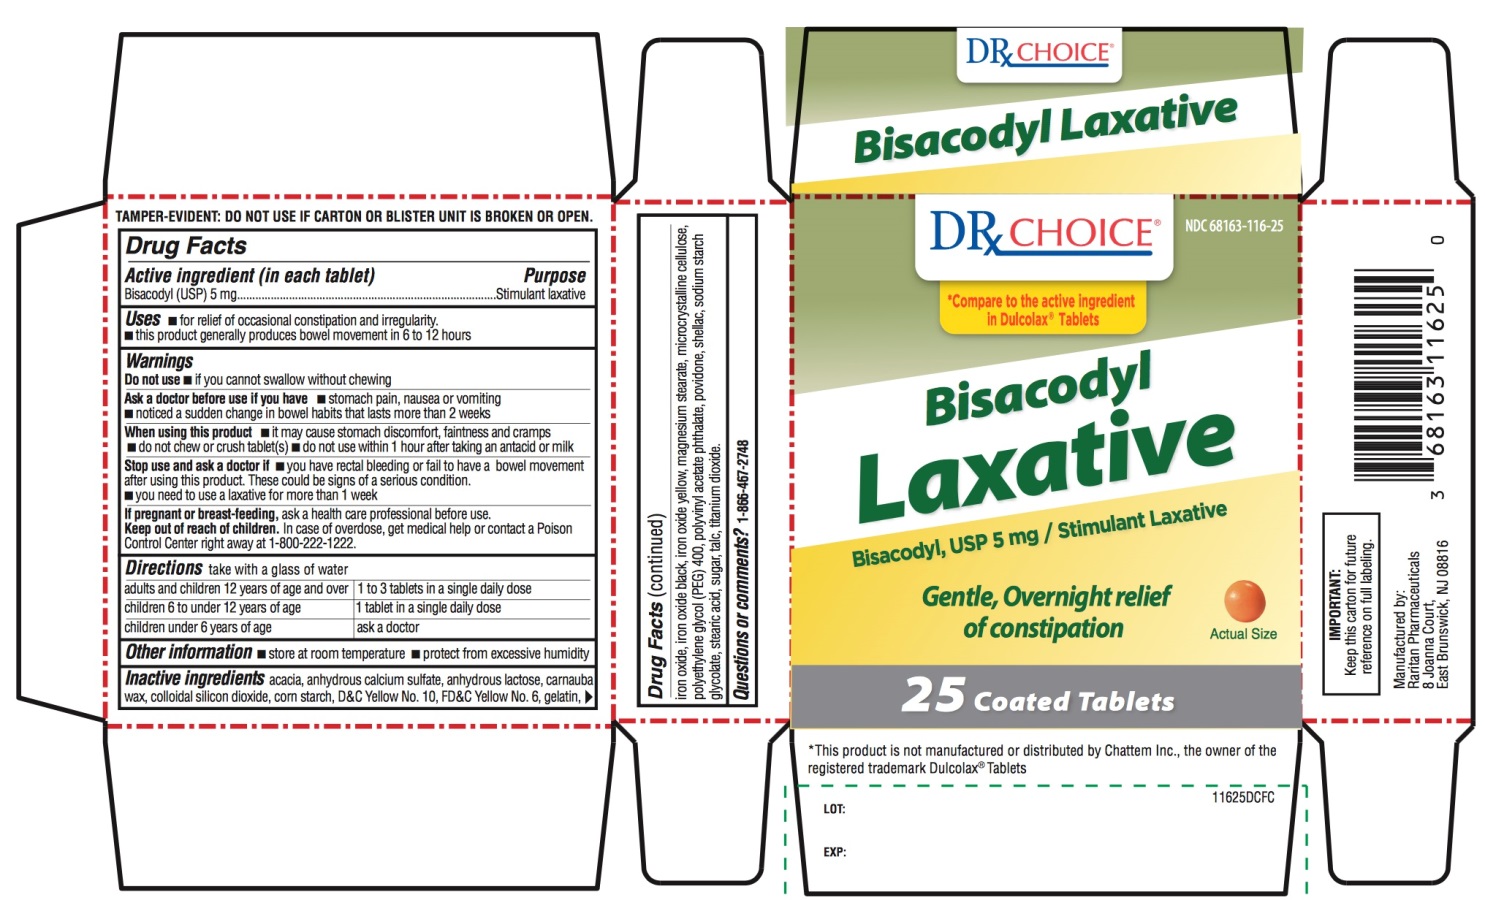 Bisacodyl Laxative 25 Coated Tablets